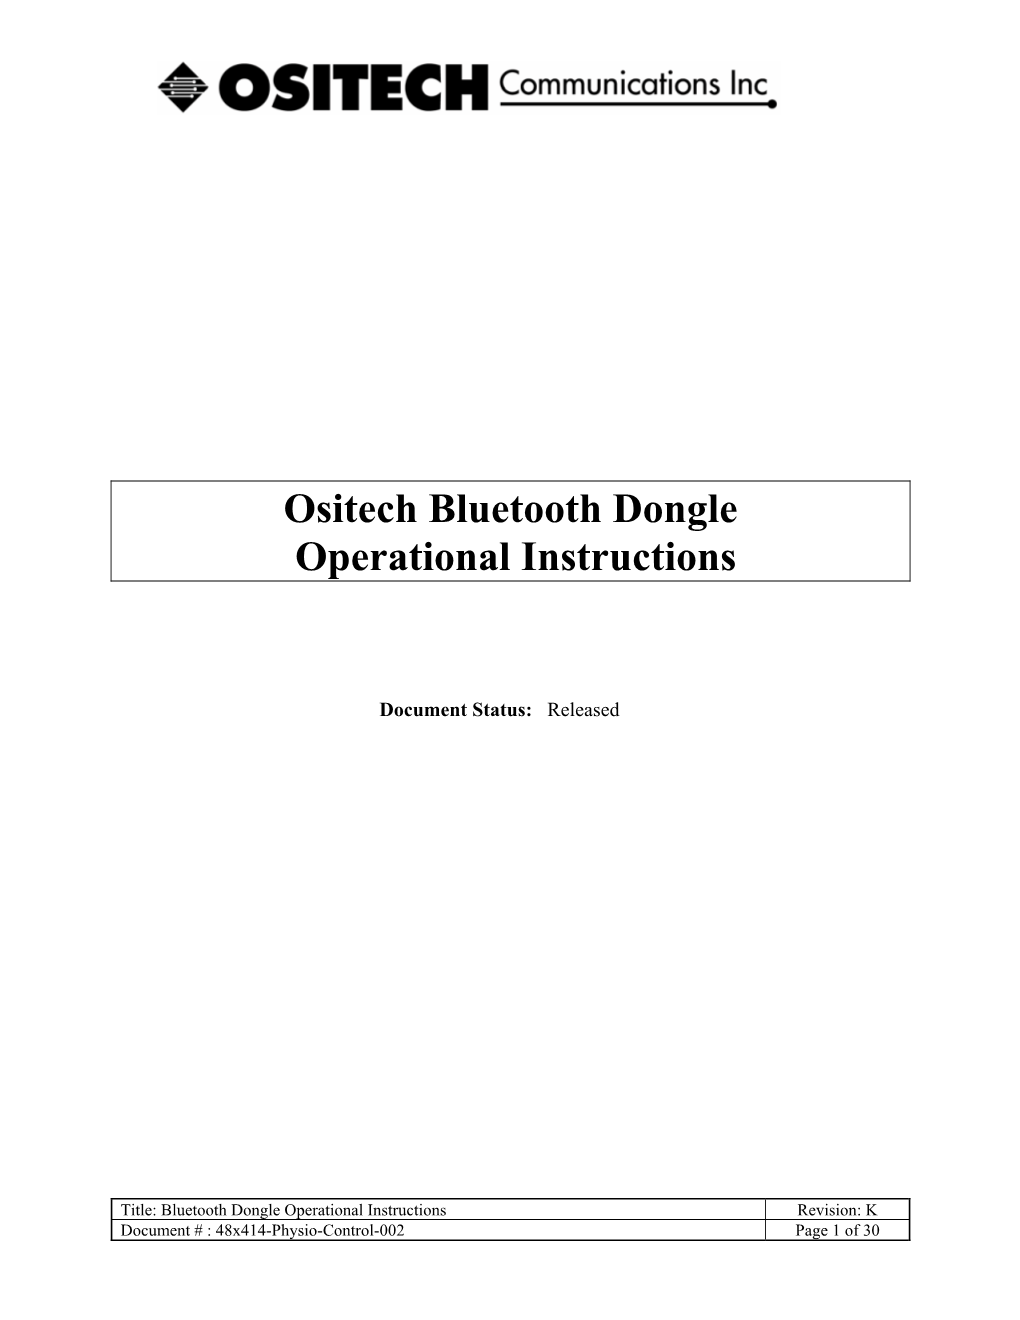 Ositech Bluetooth Dongle Operational Instructions